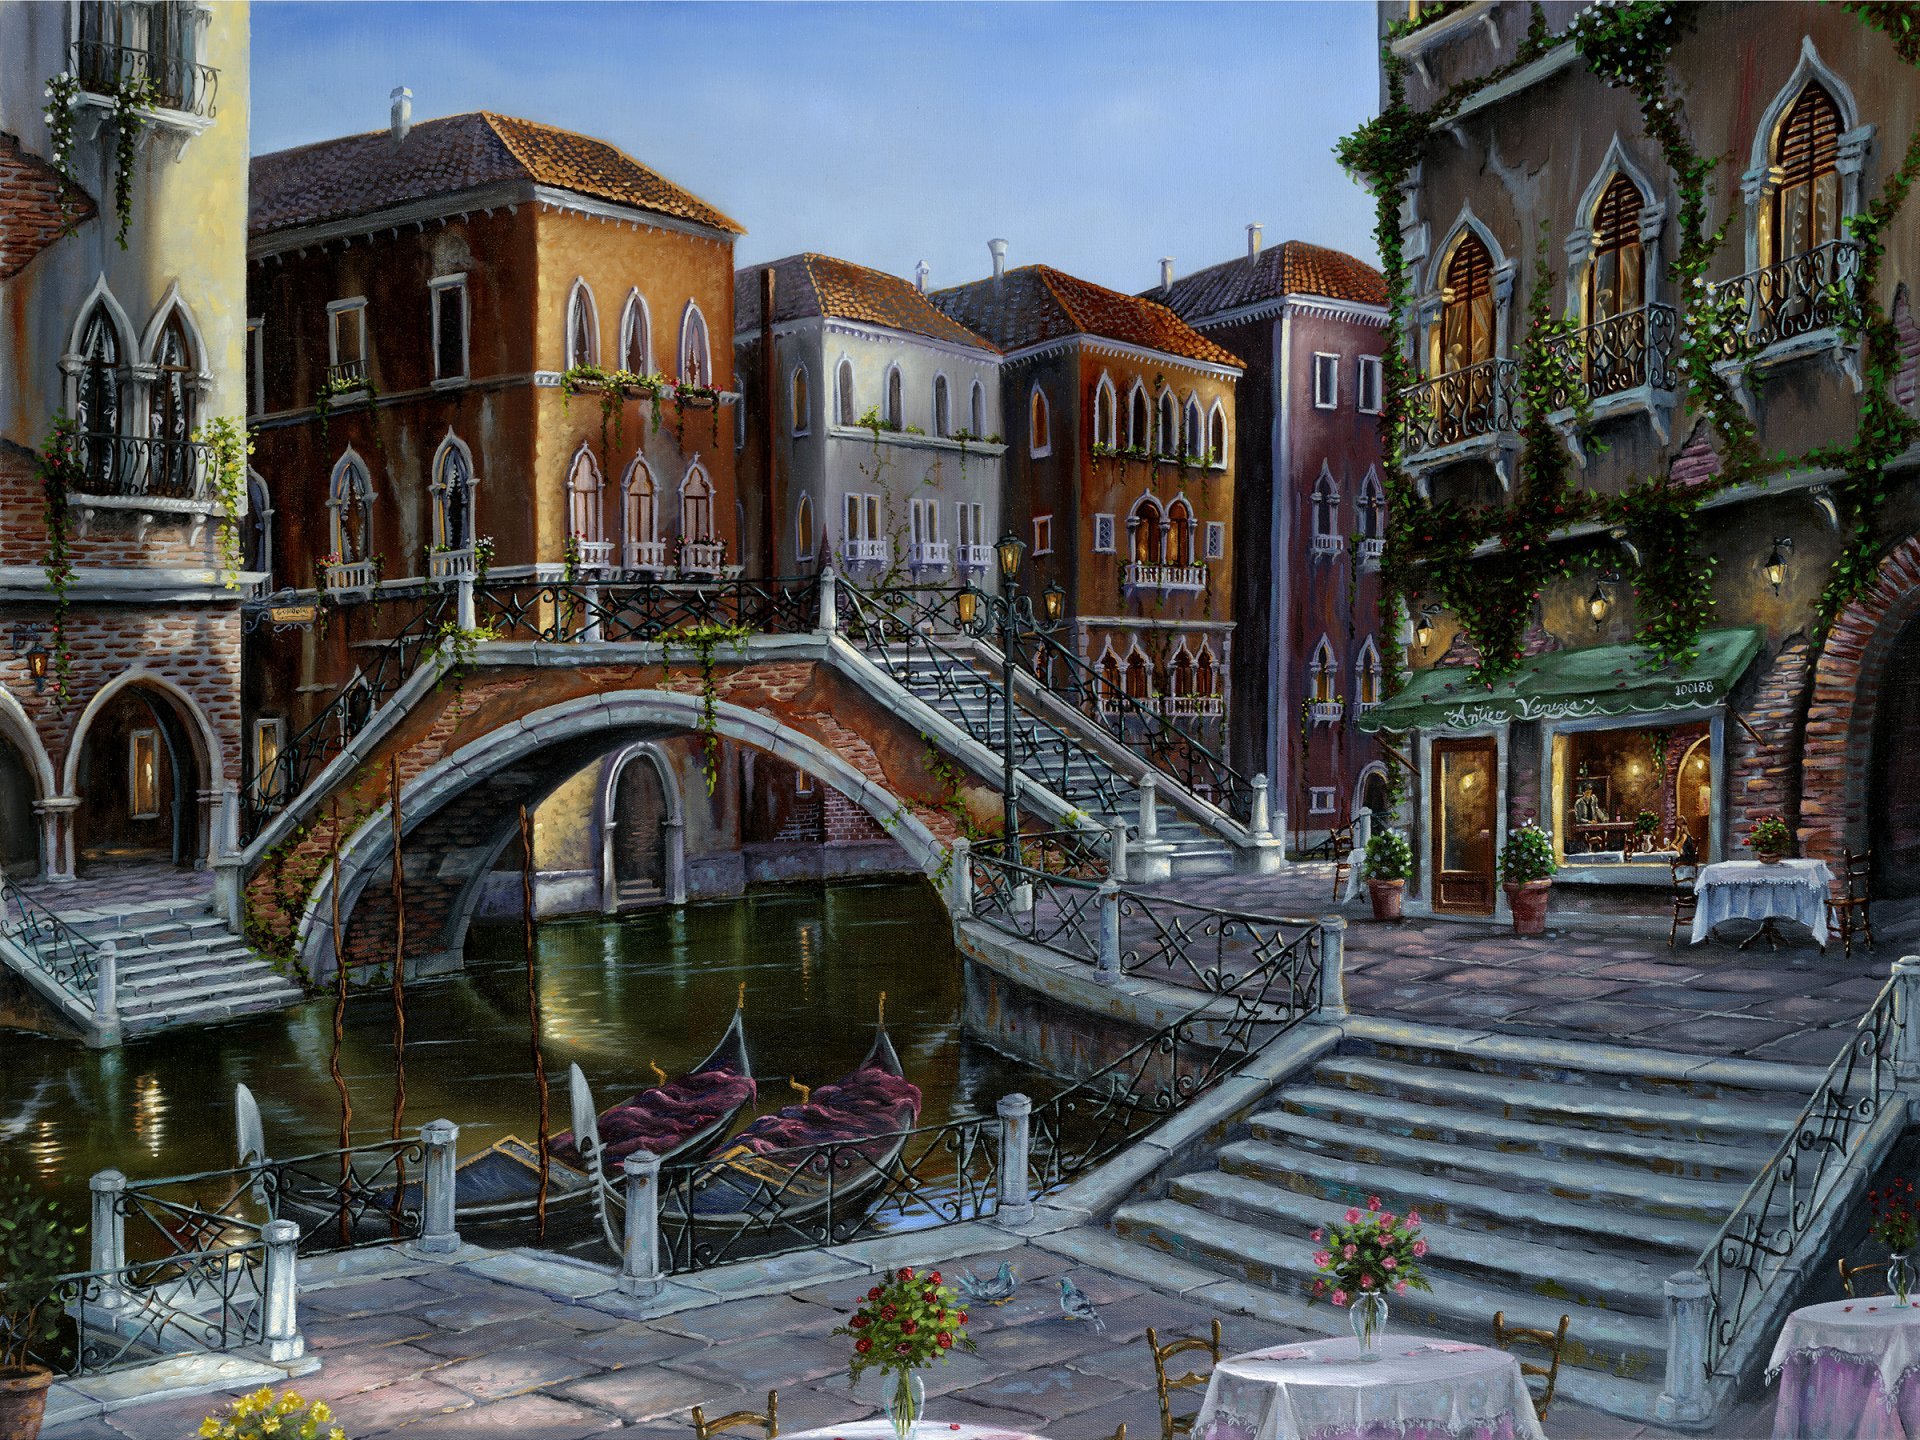 Venecia by Robert Finale